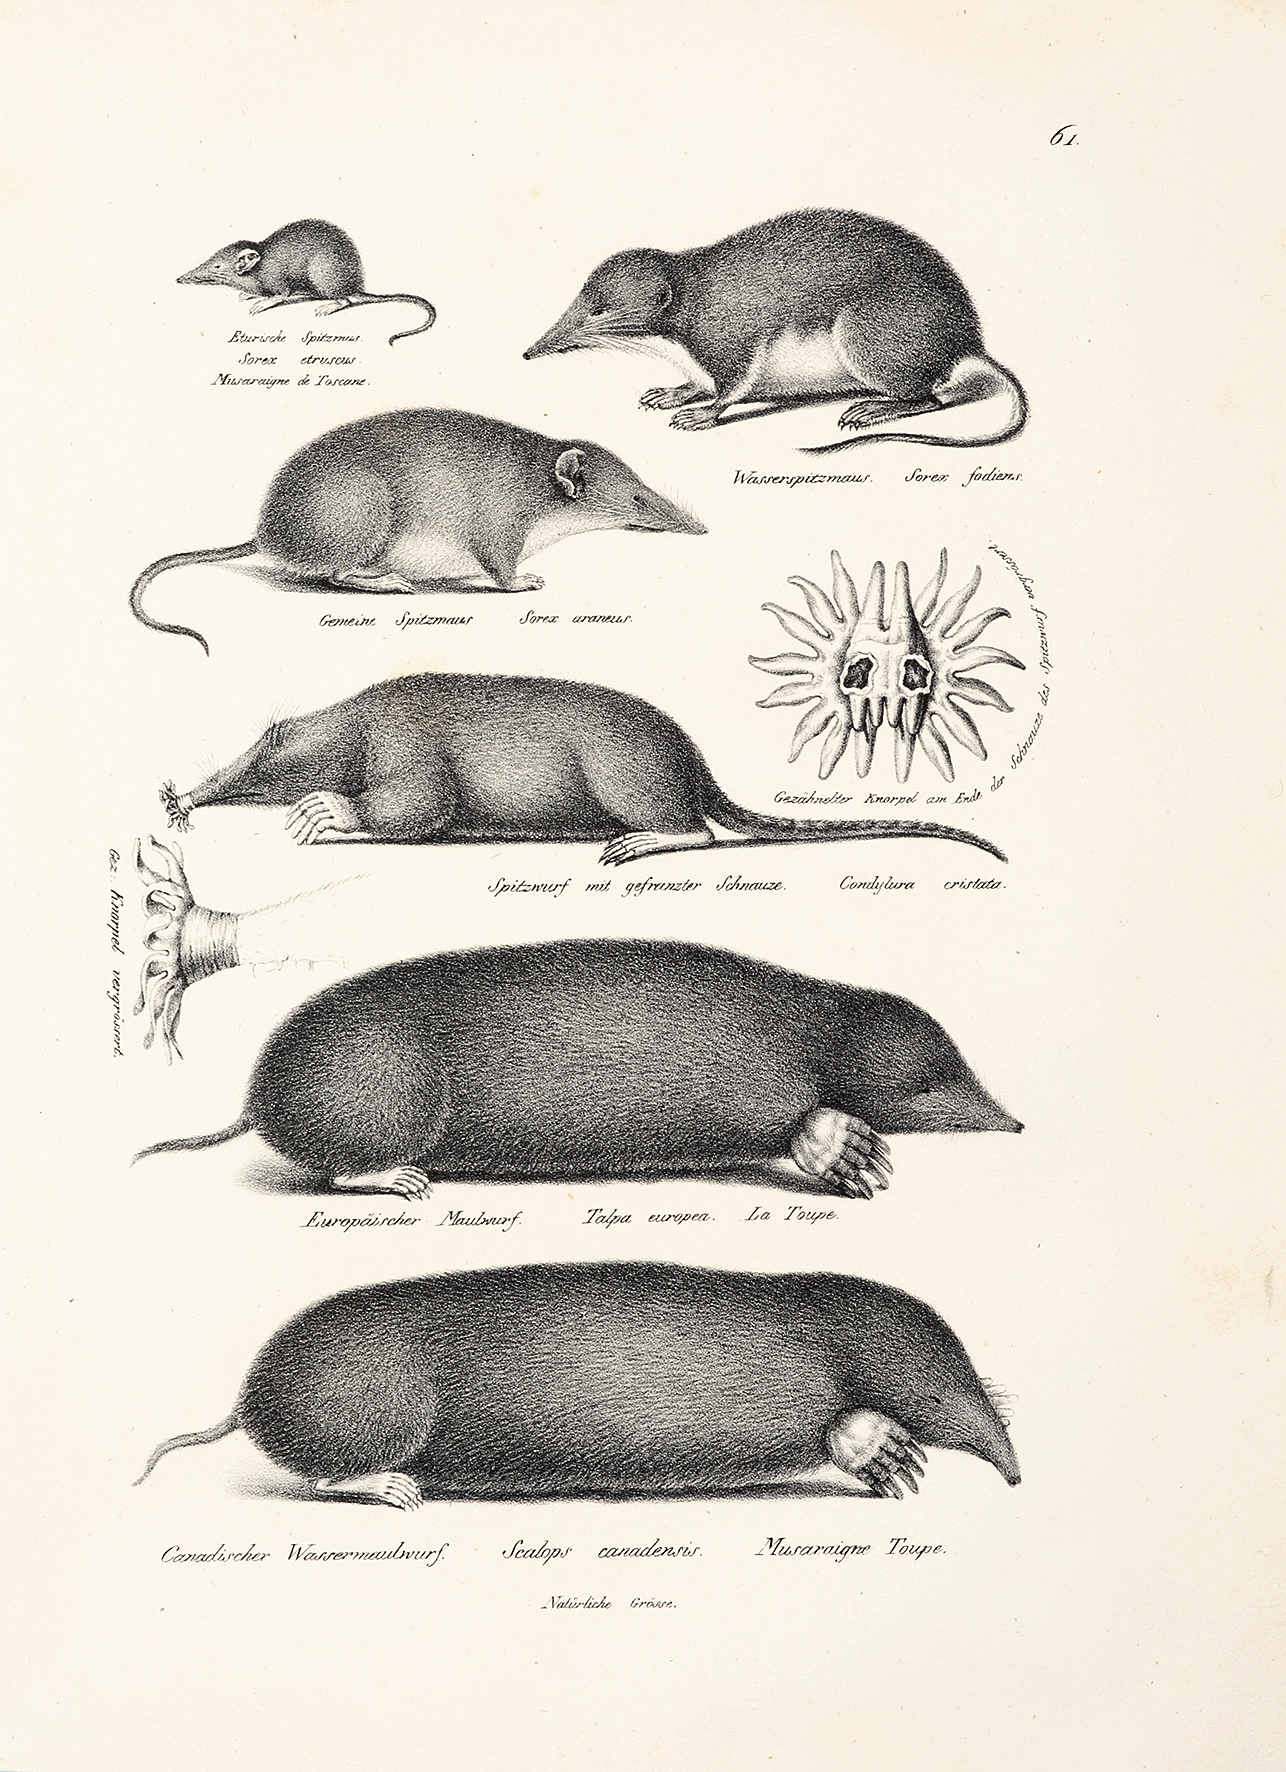 Sorex etruscus. Sorex fodiens. Sorex araneus. Condylura cristata. Talpa europea. Scalops canadensis. - Antique Print from 1824